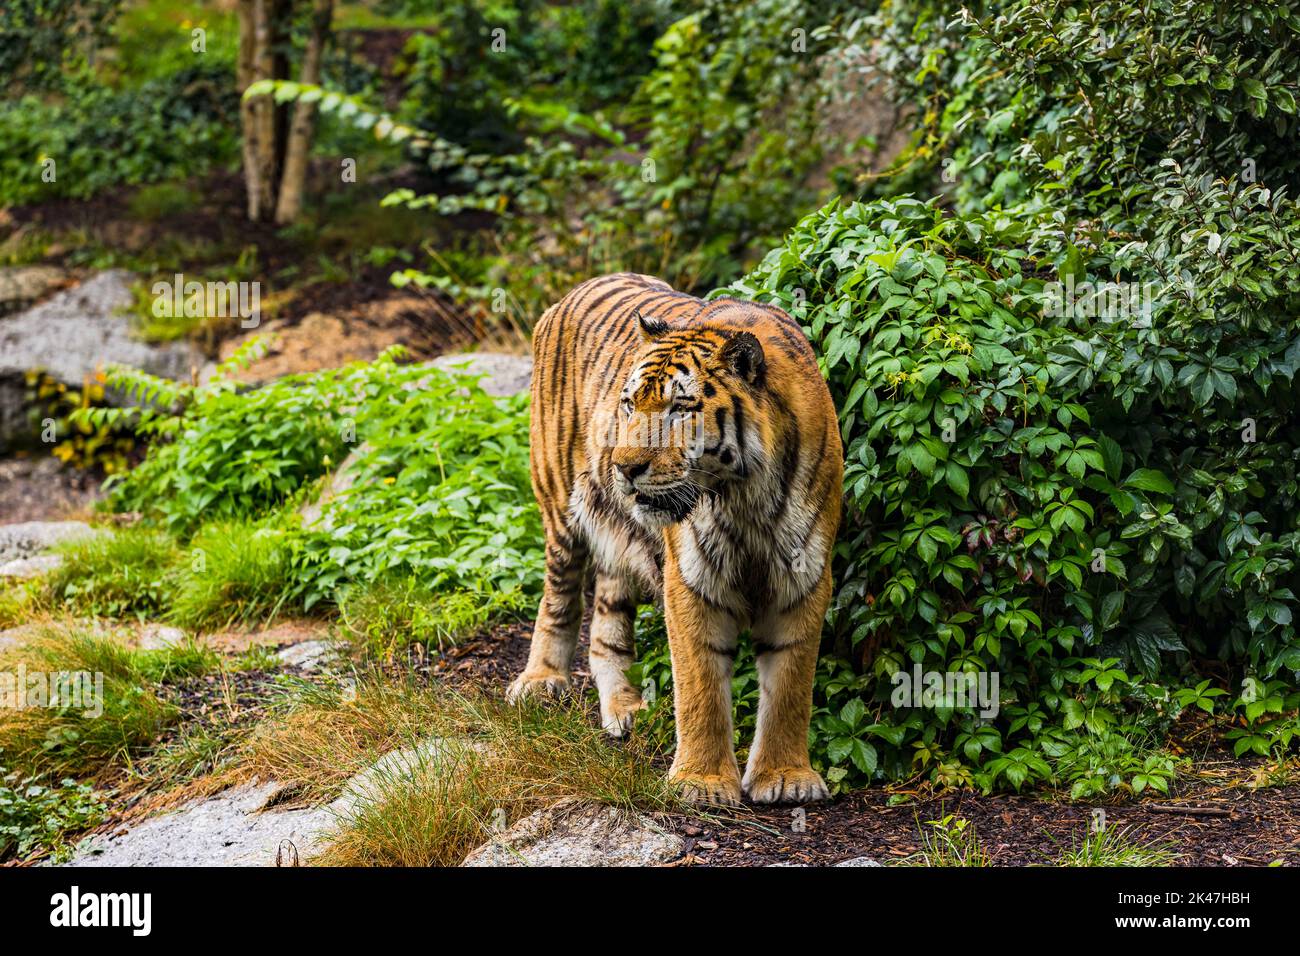 Impressive tiger in an enclosure at Berlin zoo, Berlin, Germany Stock Photo